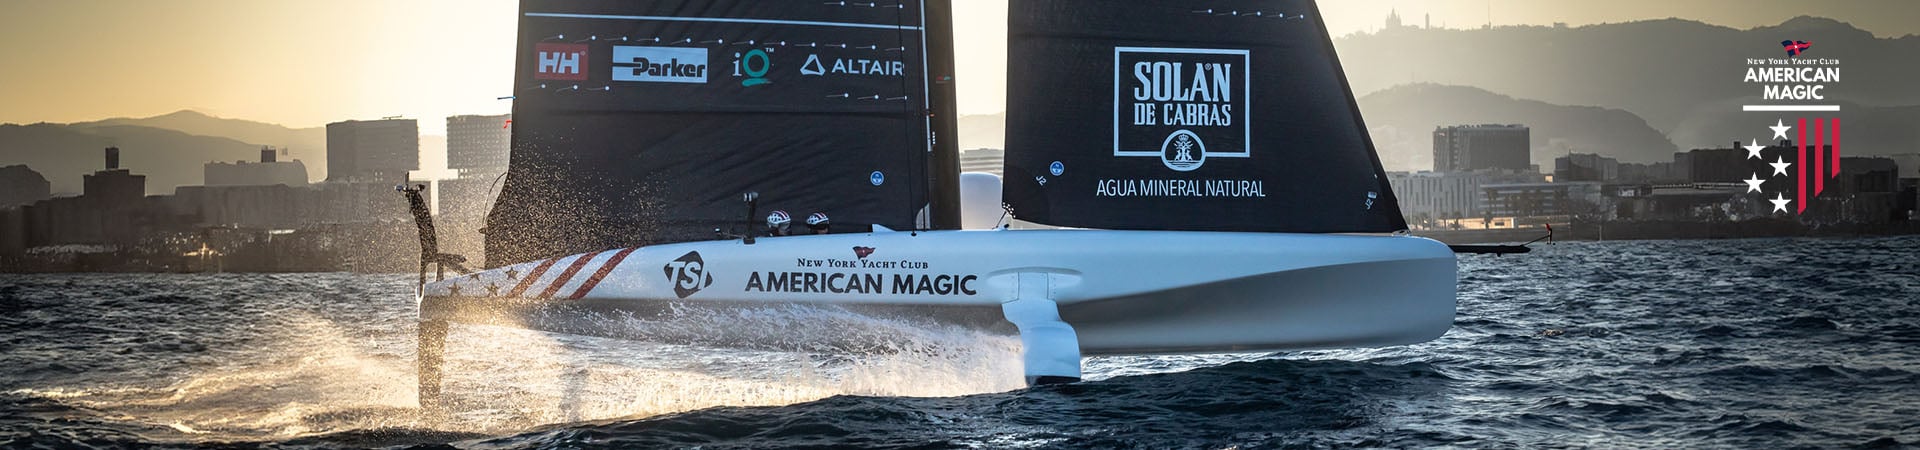 American Magic boat racing in the water.